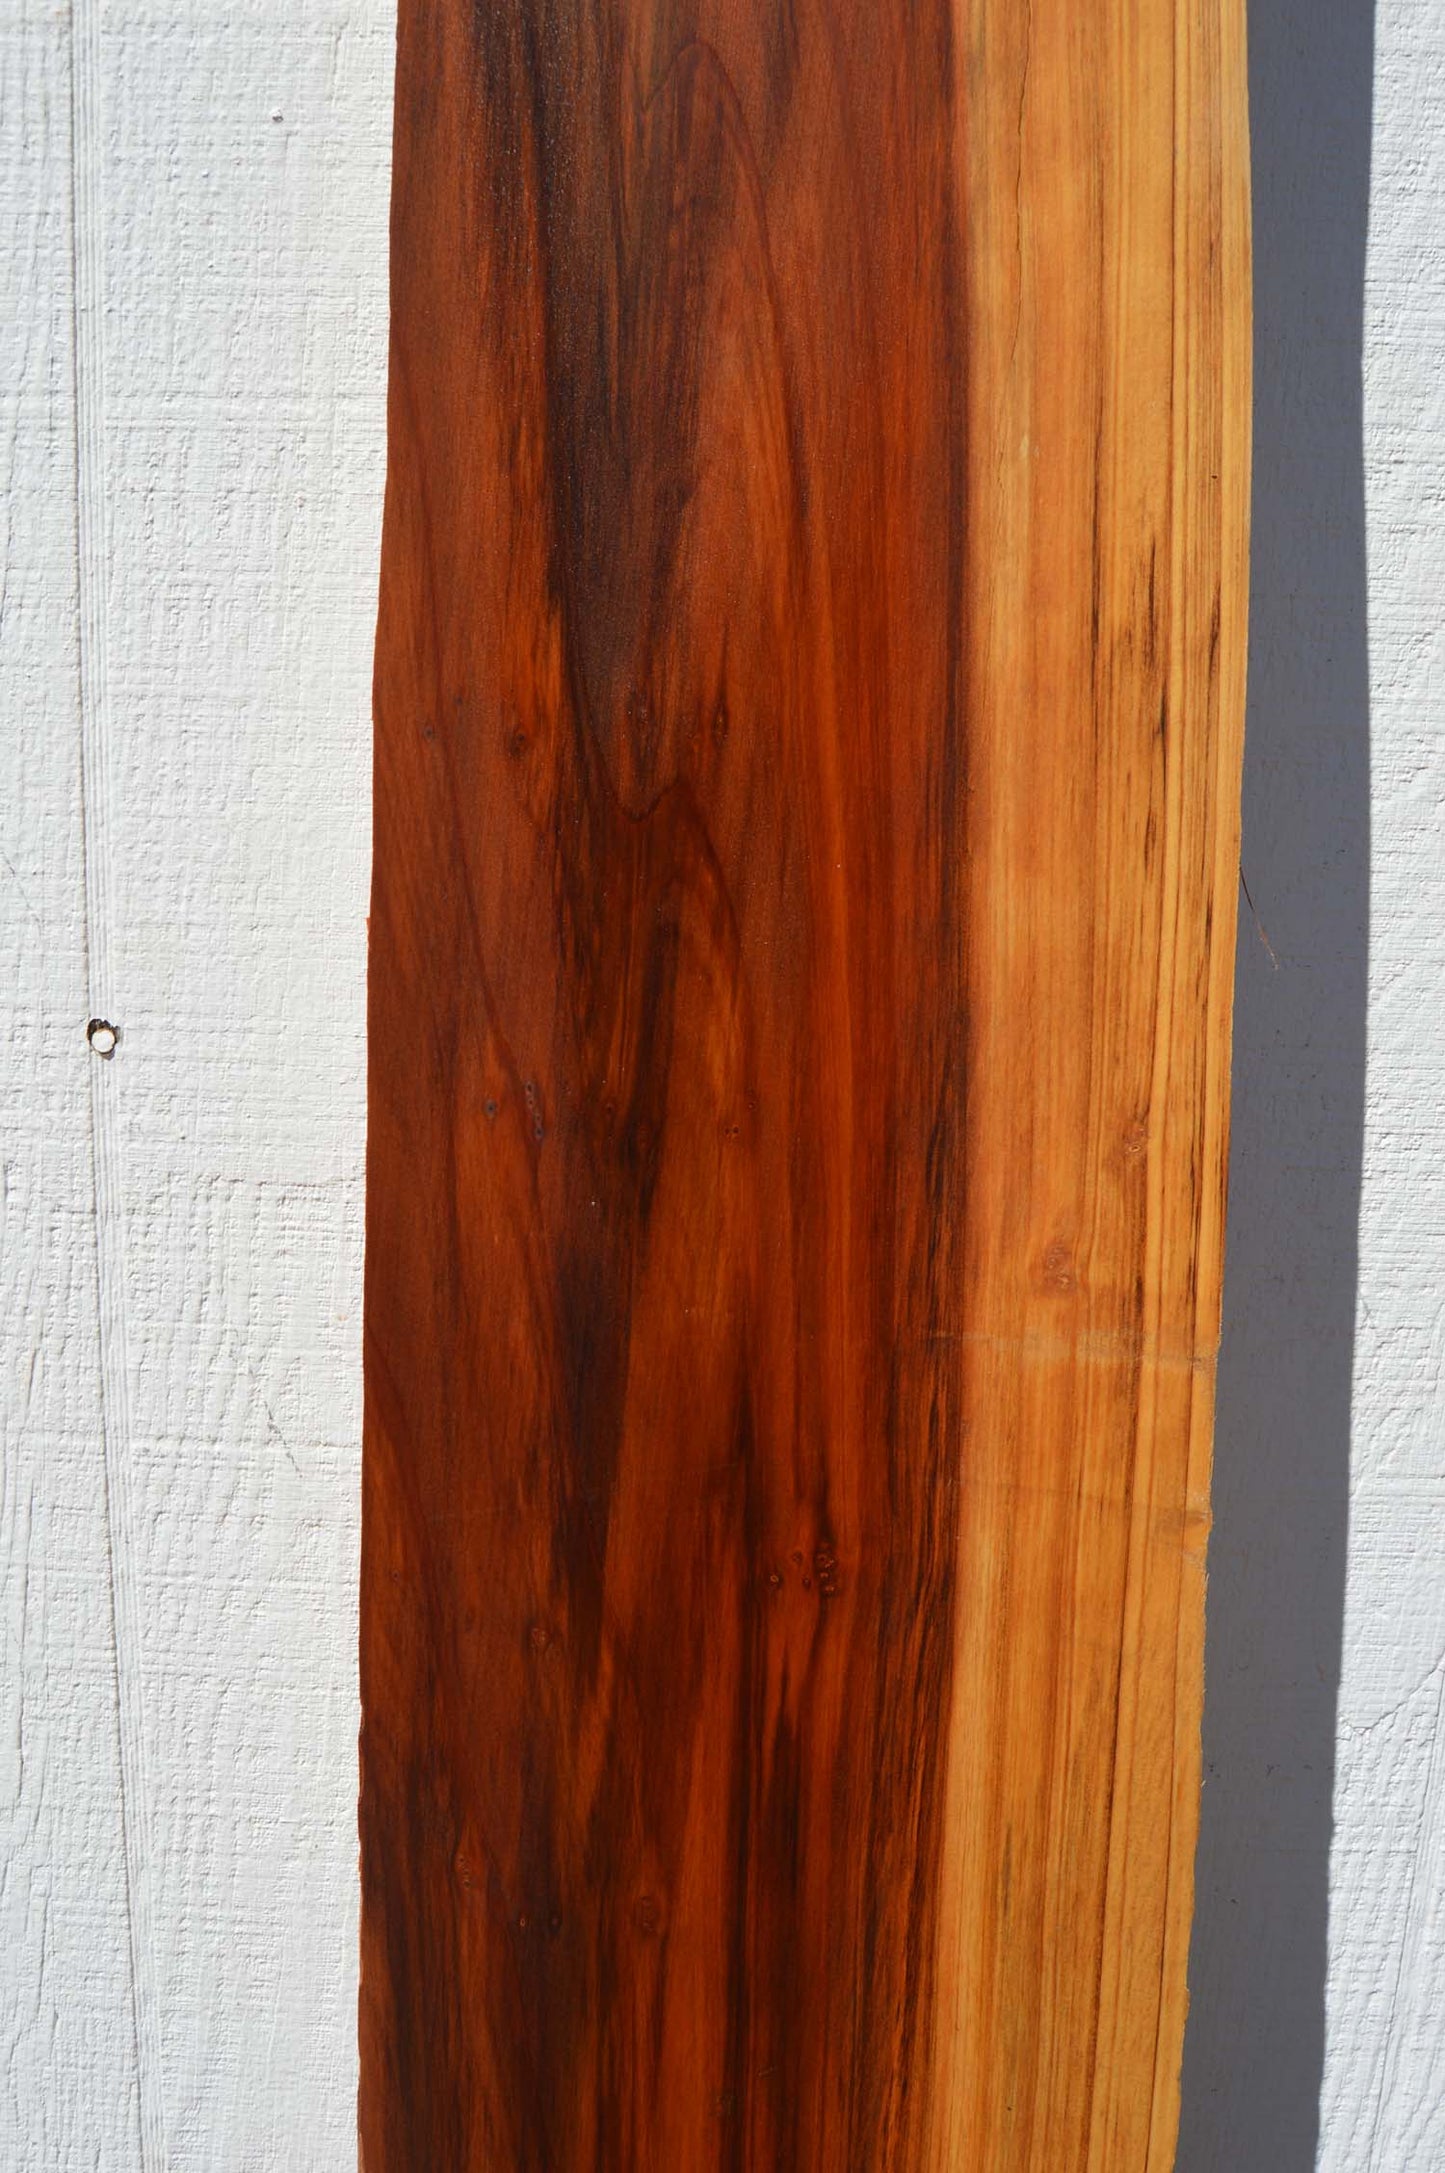 Redwood Board REDSPC21